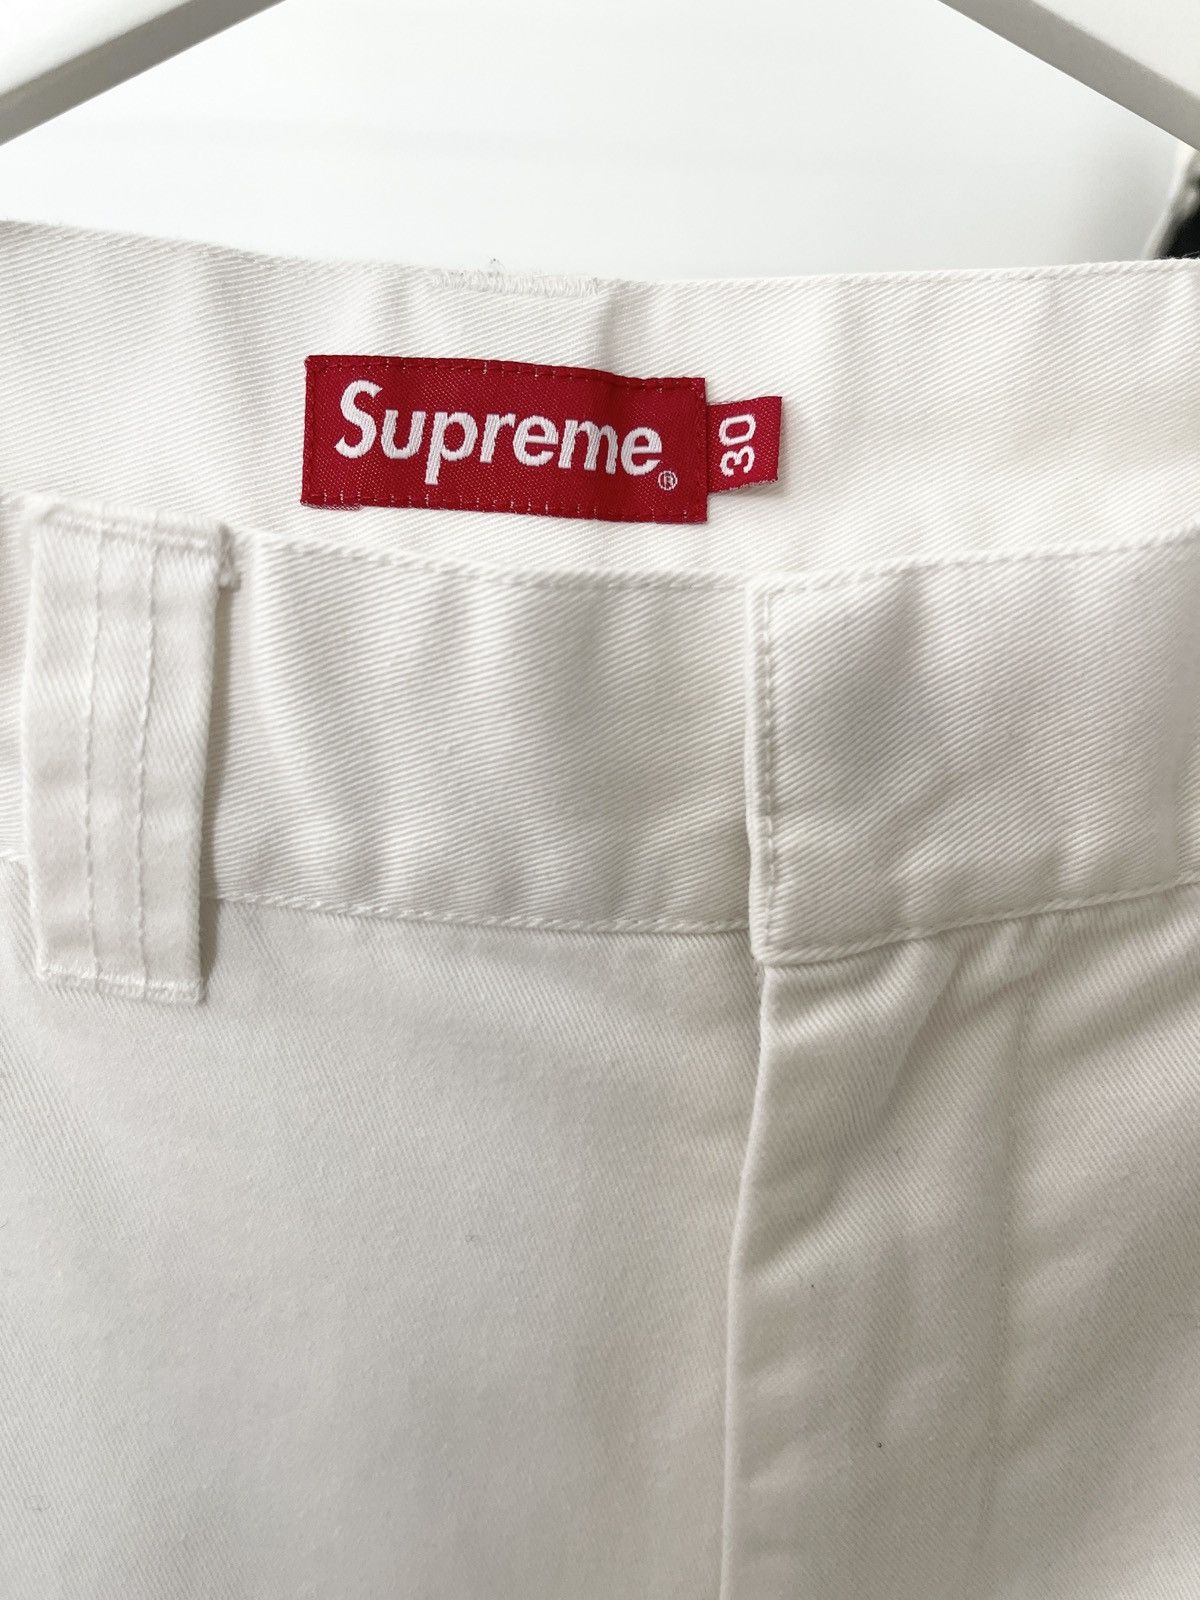 2020 Supreme x Daniel Johnston Embroidered Pants - 5